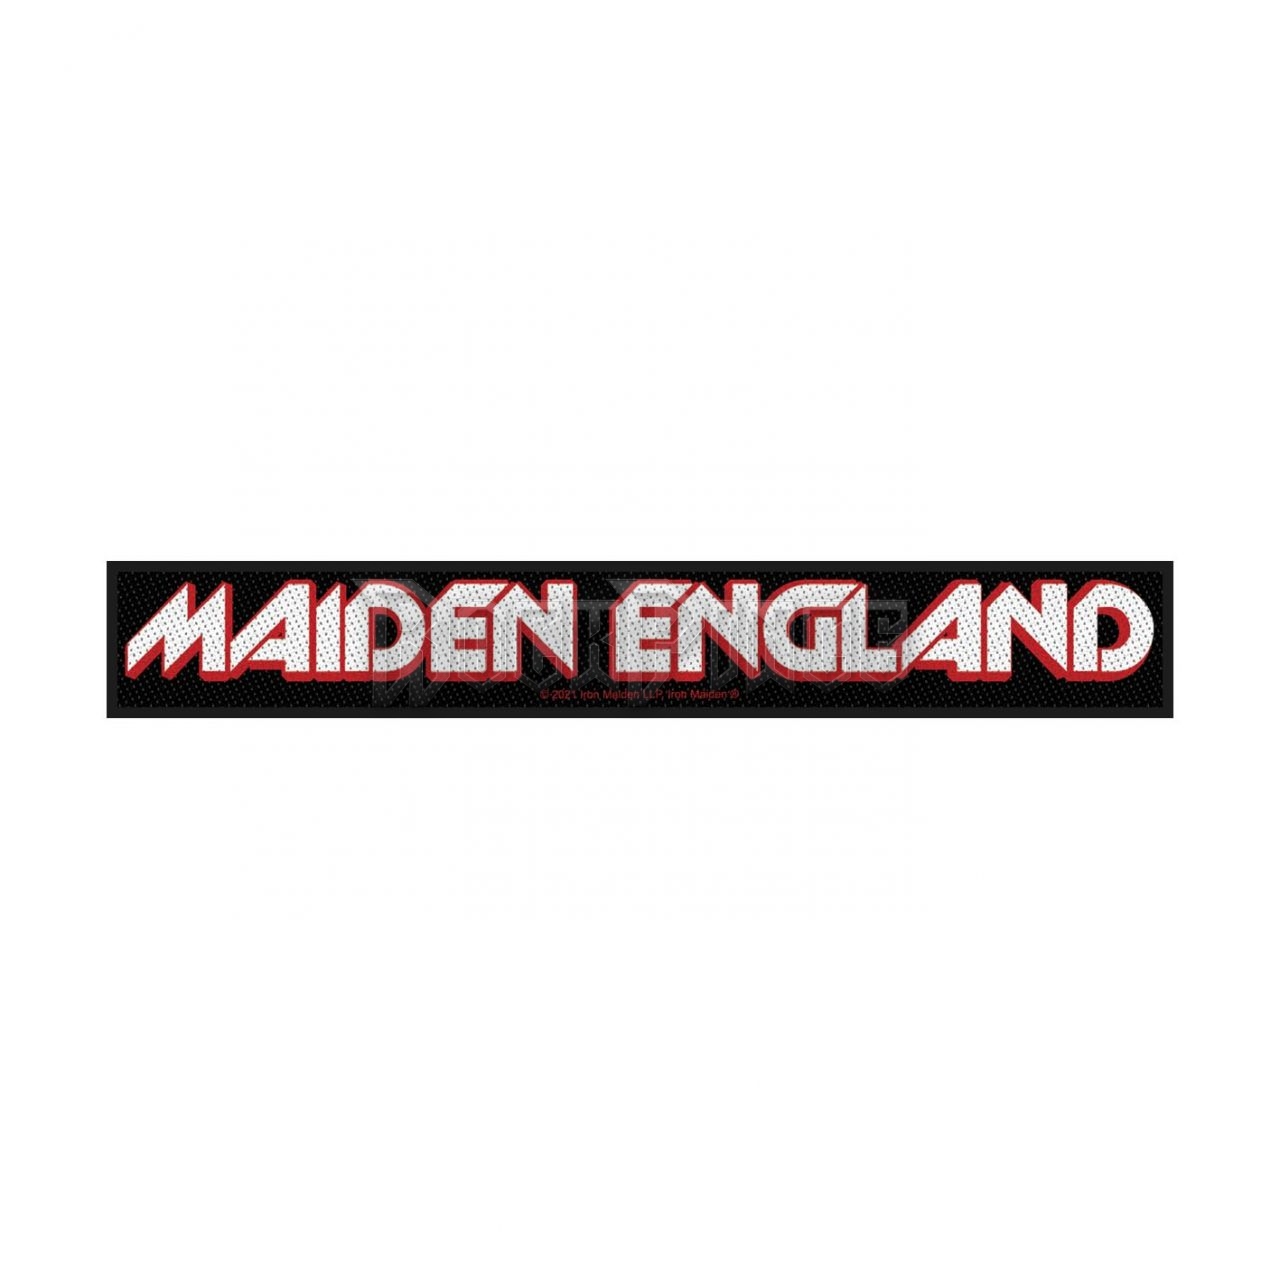 IRON MAIDEN - MAIDEN ENGLAND (Superstrip) - kisfelvarró - SSR190